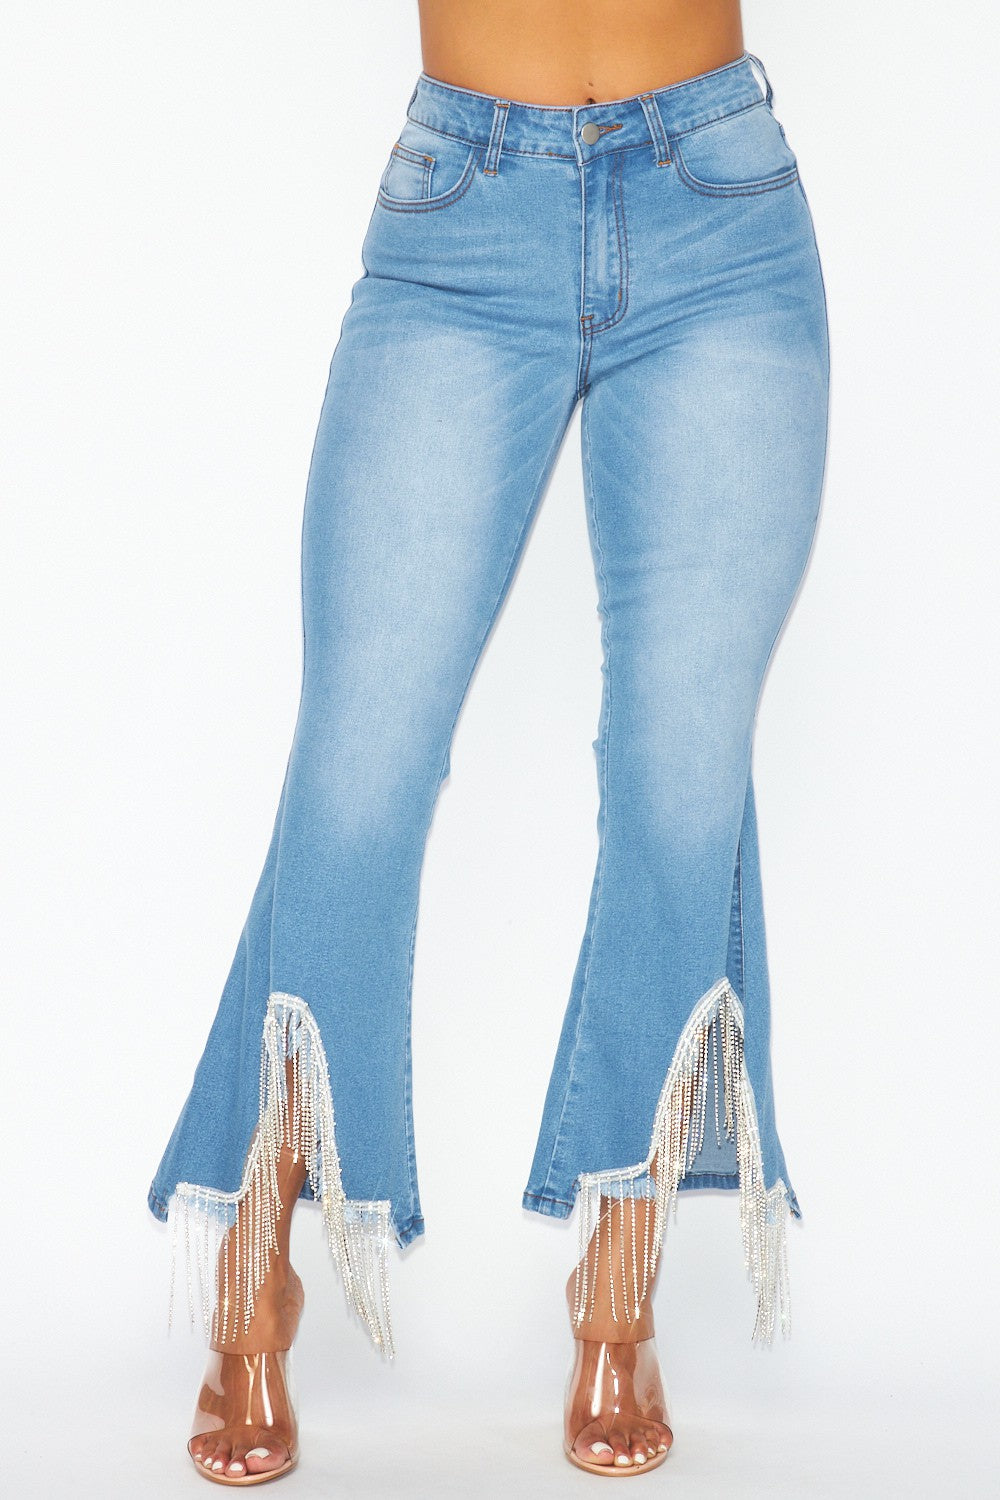 Rhinestone Fringe Bottom Jeans - SASHAY COUTURE BOUTIQUE Bottoms